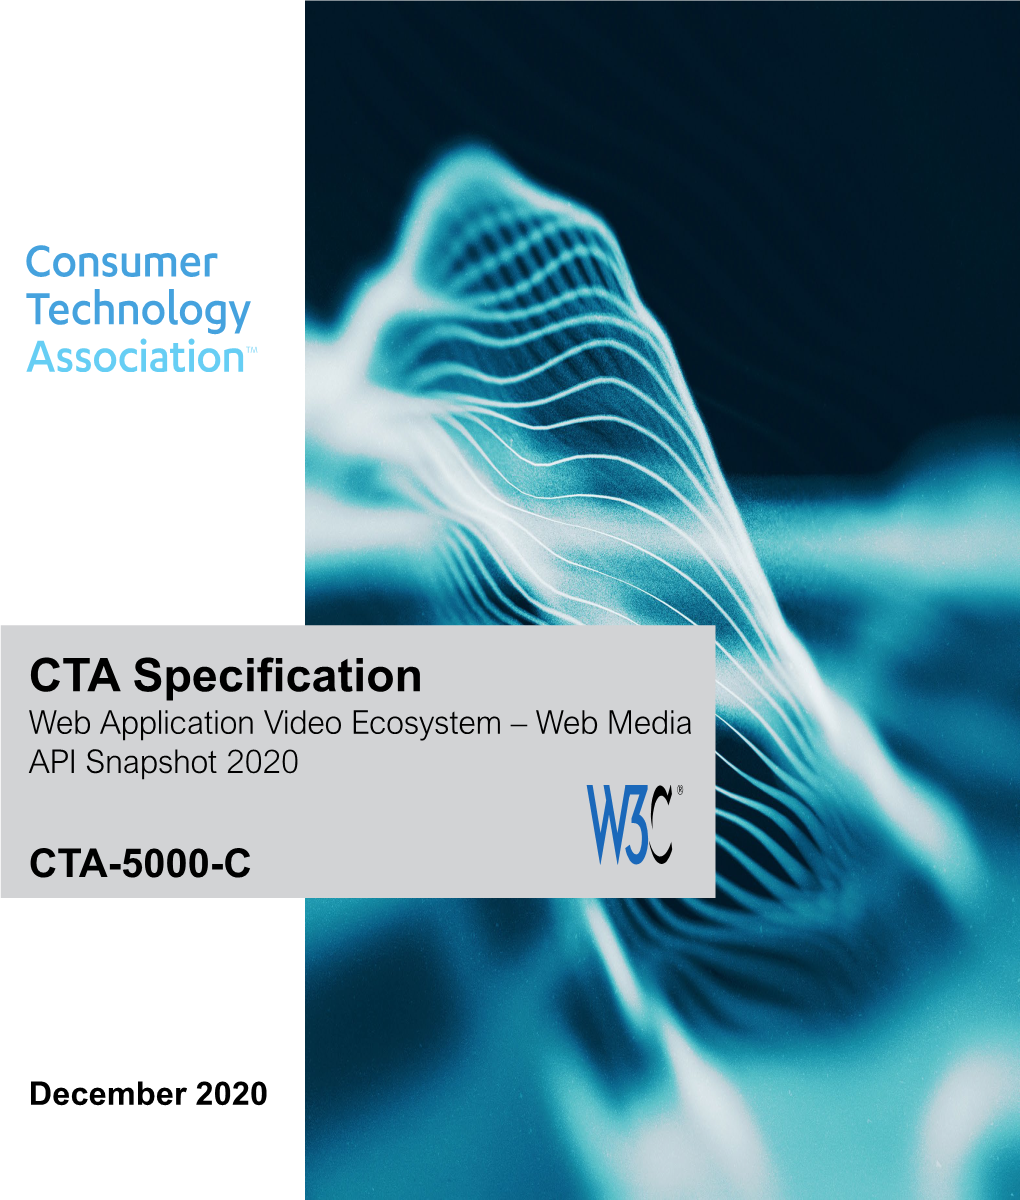 CTA Specification Web Application Video Ecosystem – Web Media API Snapshot 2020